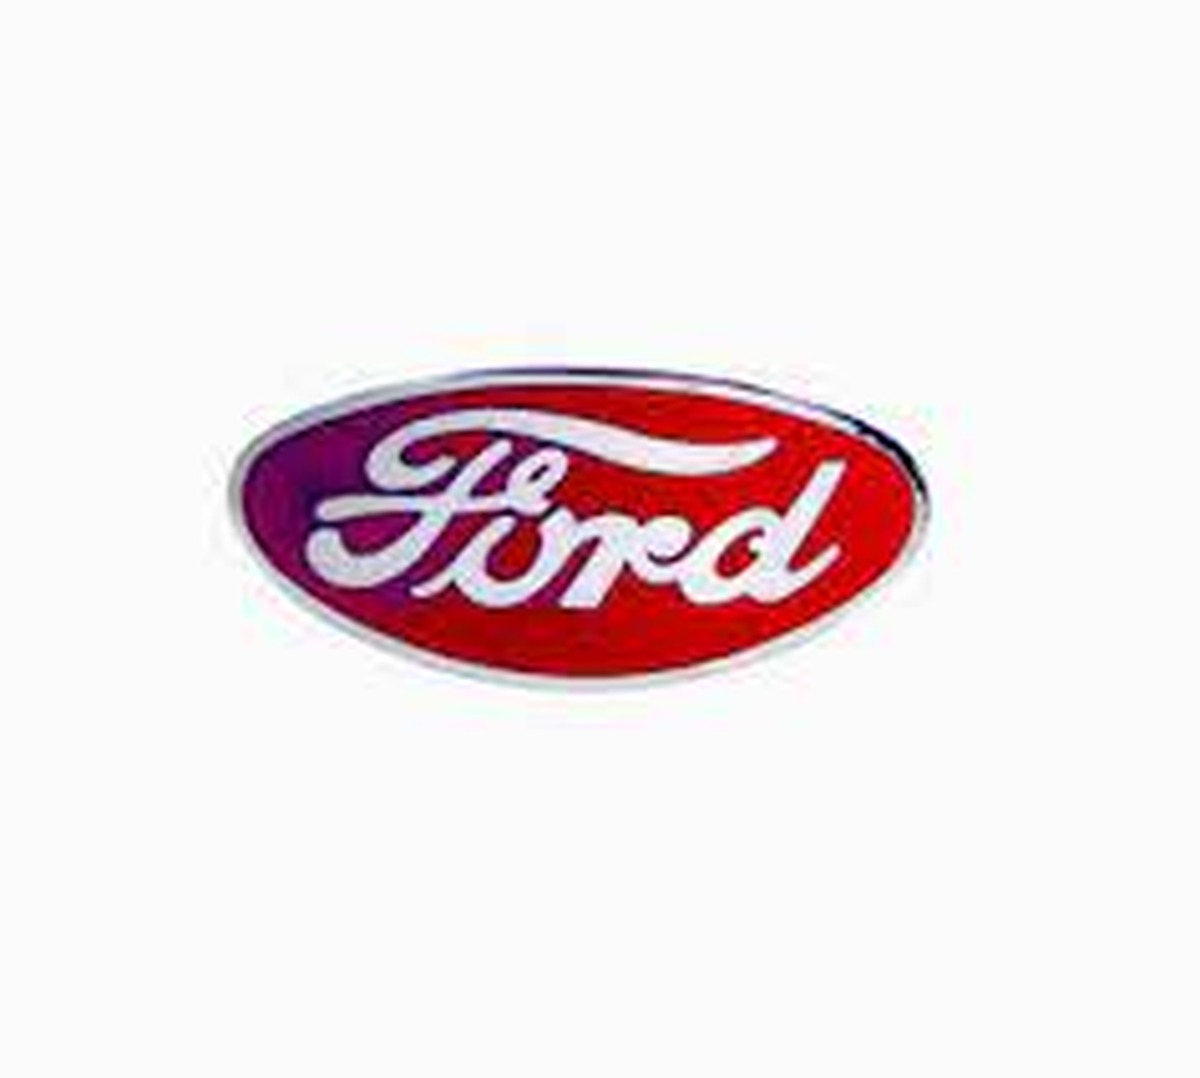 Grill/Radiator Emblems - Ford porcelain grill emblem RED 1932 pas 1932-35 com